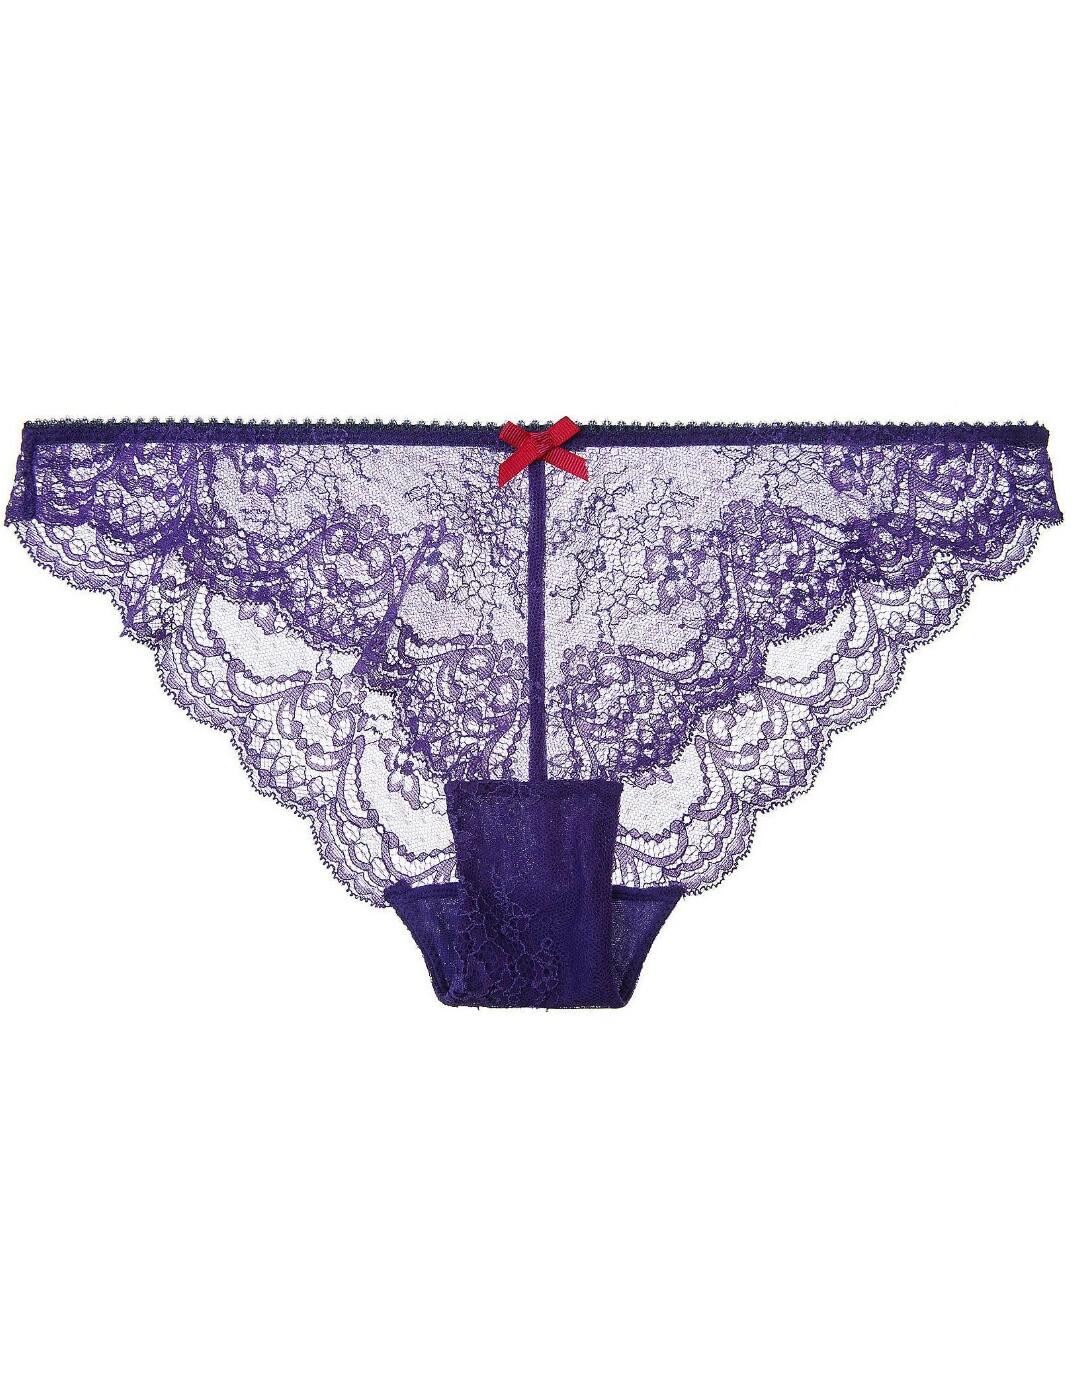 H30-1119 Heidi Klum Odette Bikini Brief - H30-1119 Prism Violet/Evening Blue